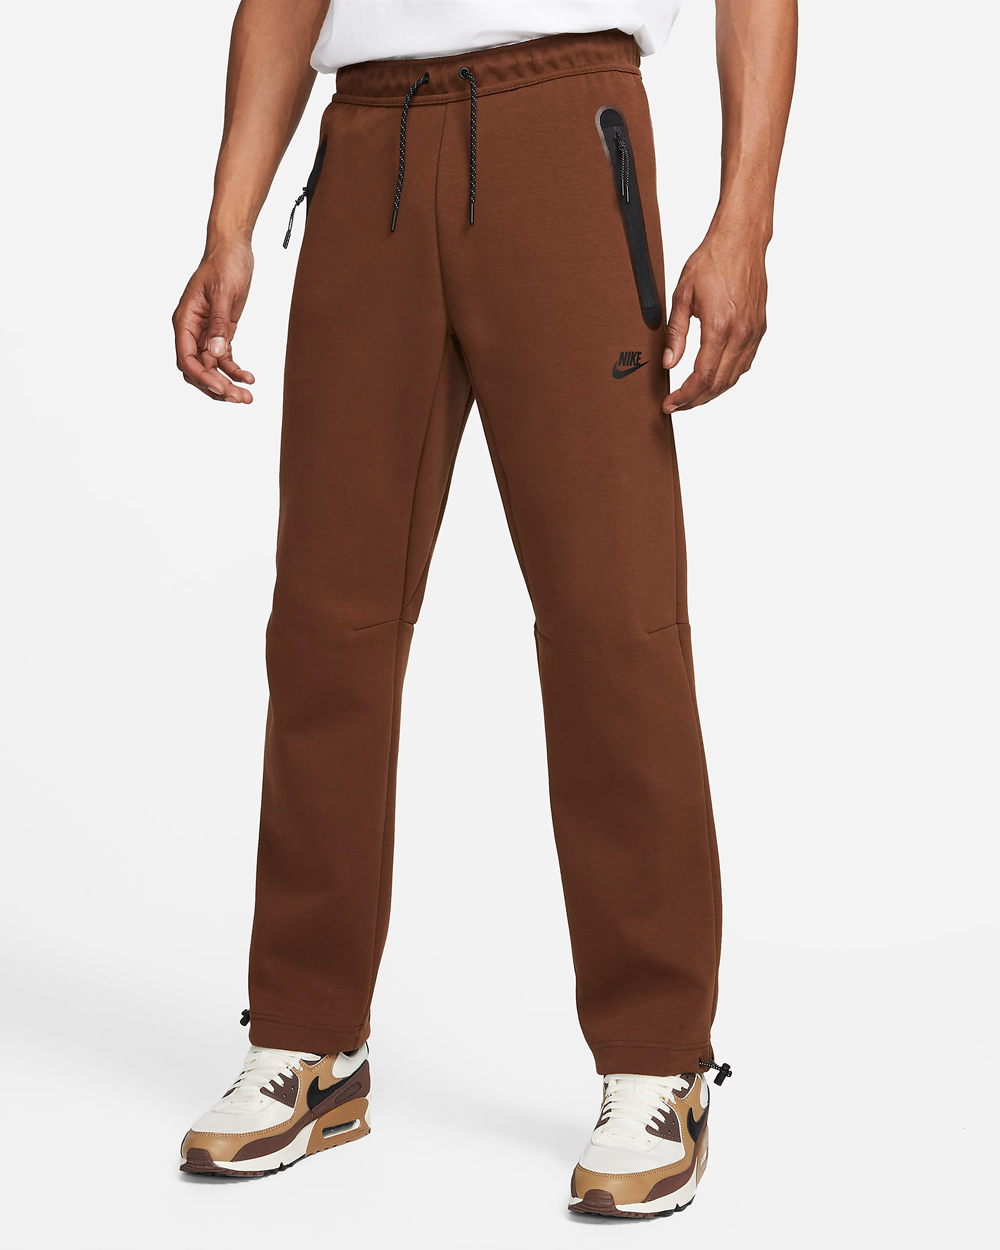 nike-tech-fleece-pants-brown-cocao-wow